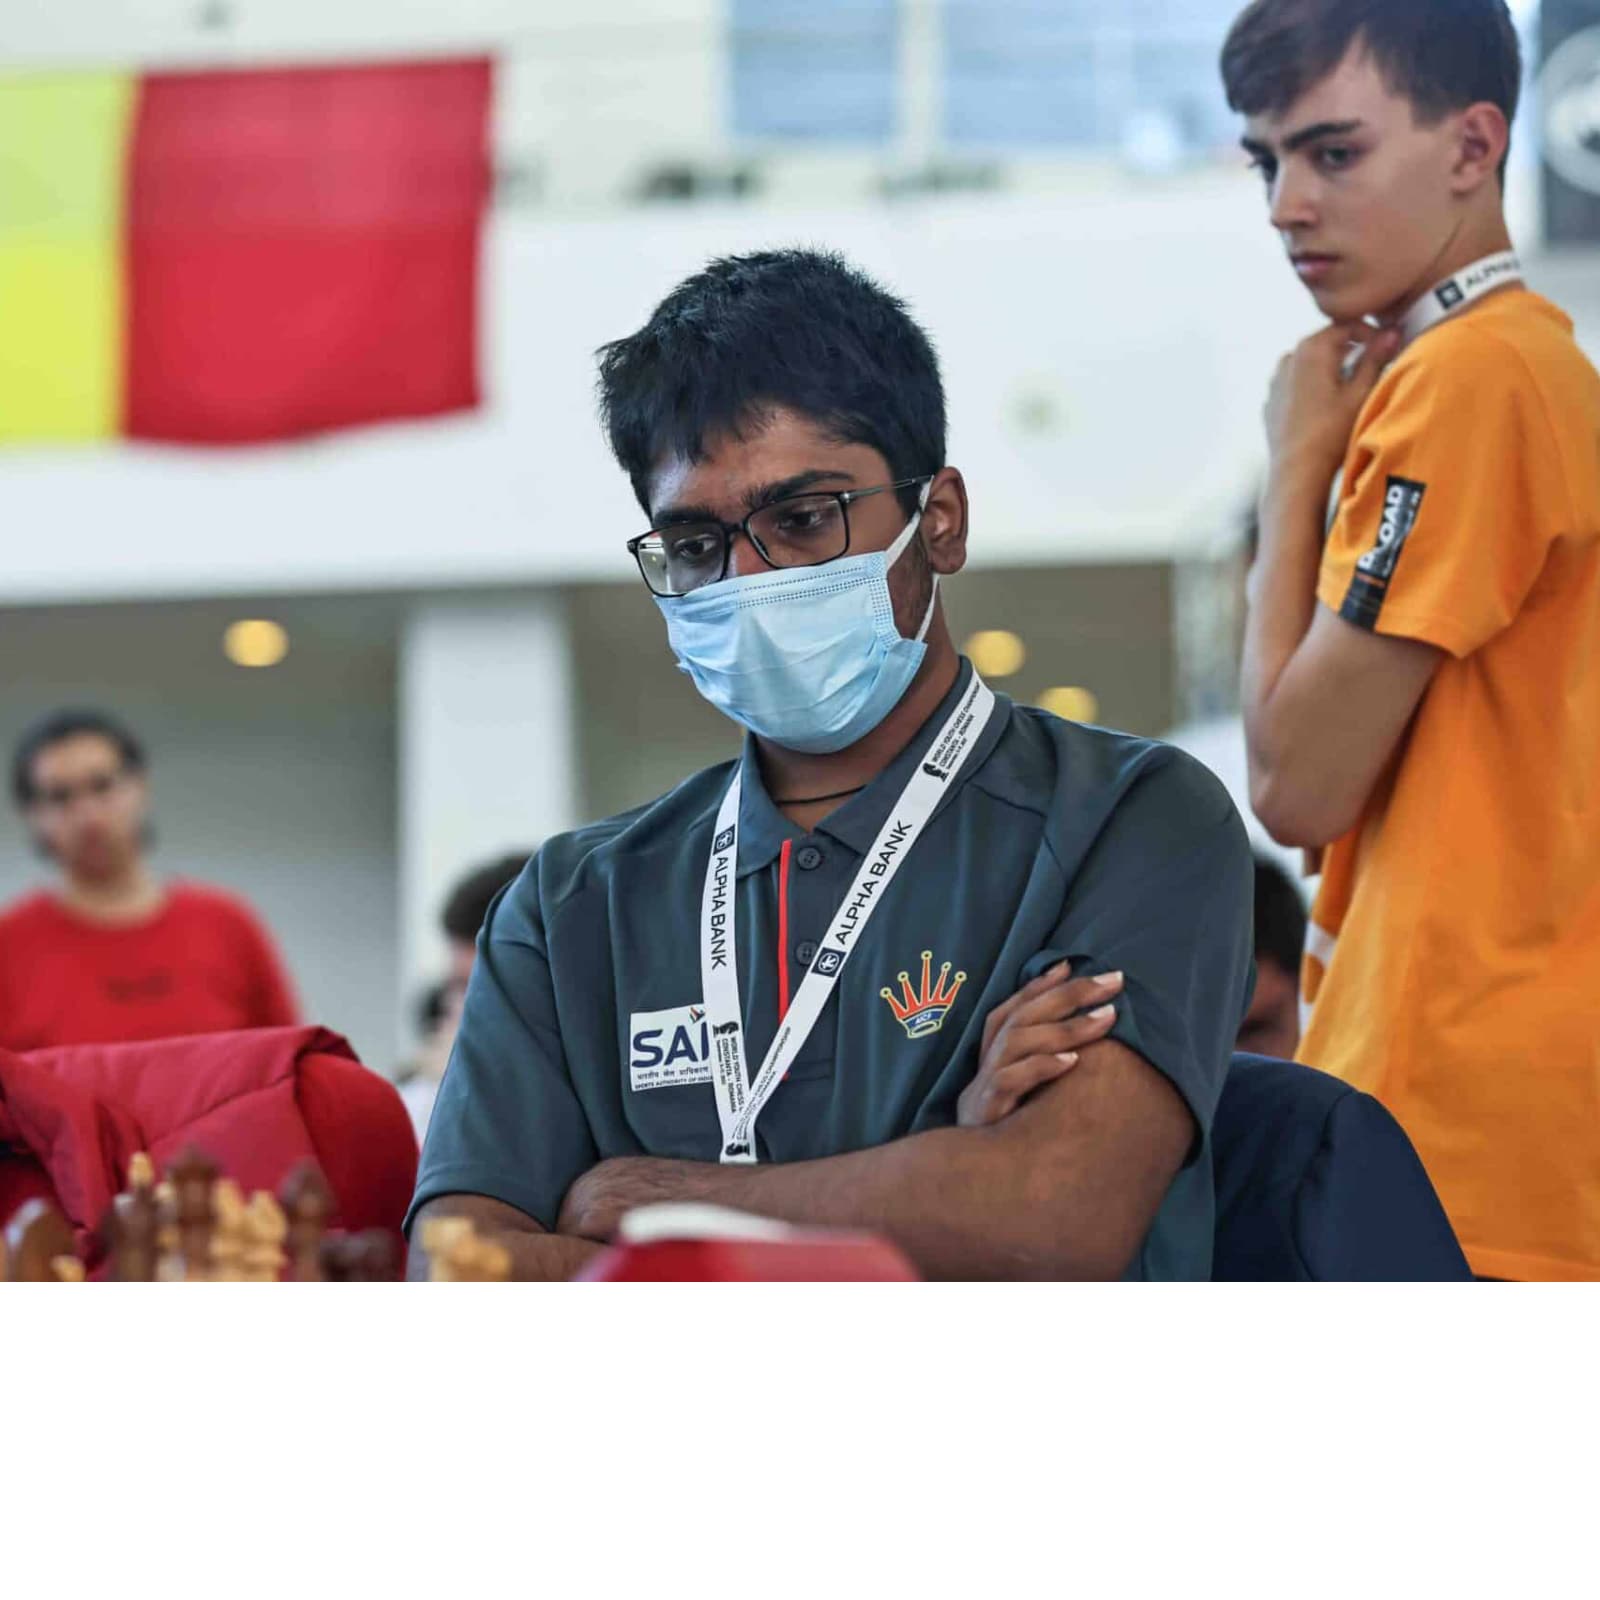 Pranav Anand Becomes India's 76th Grandmaster, Close to Winning